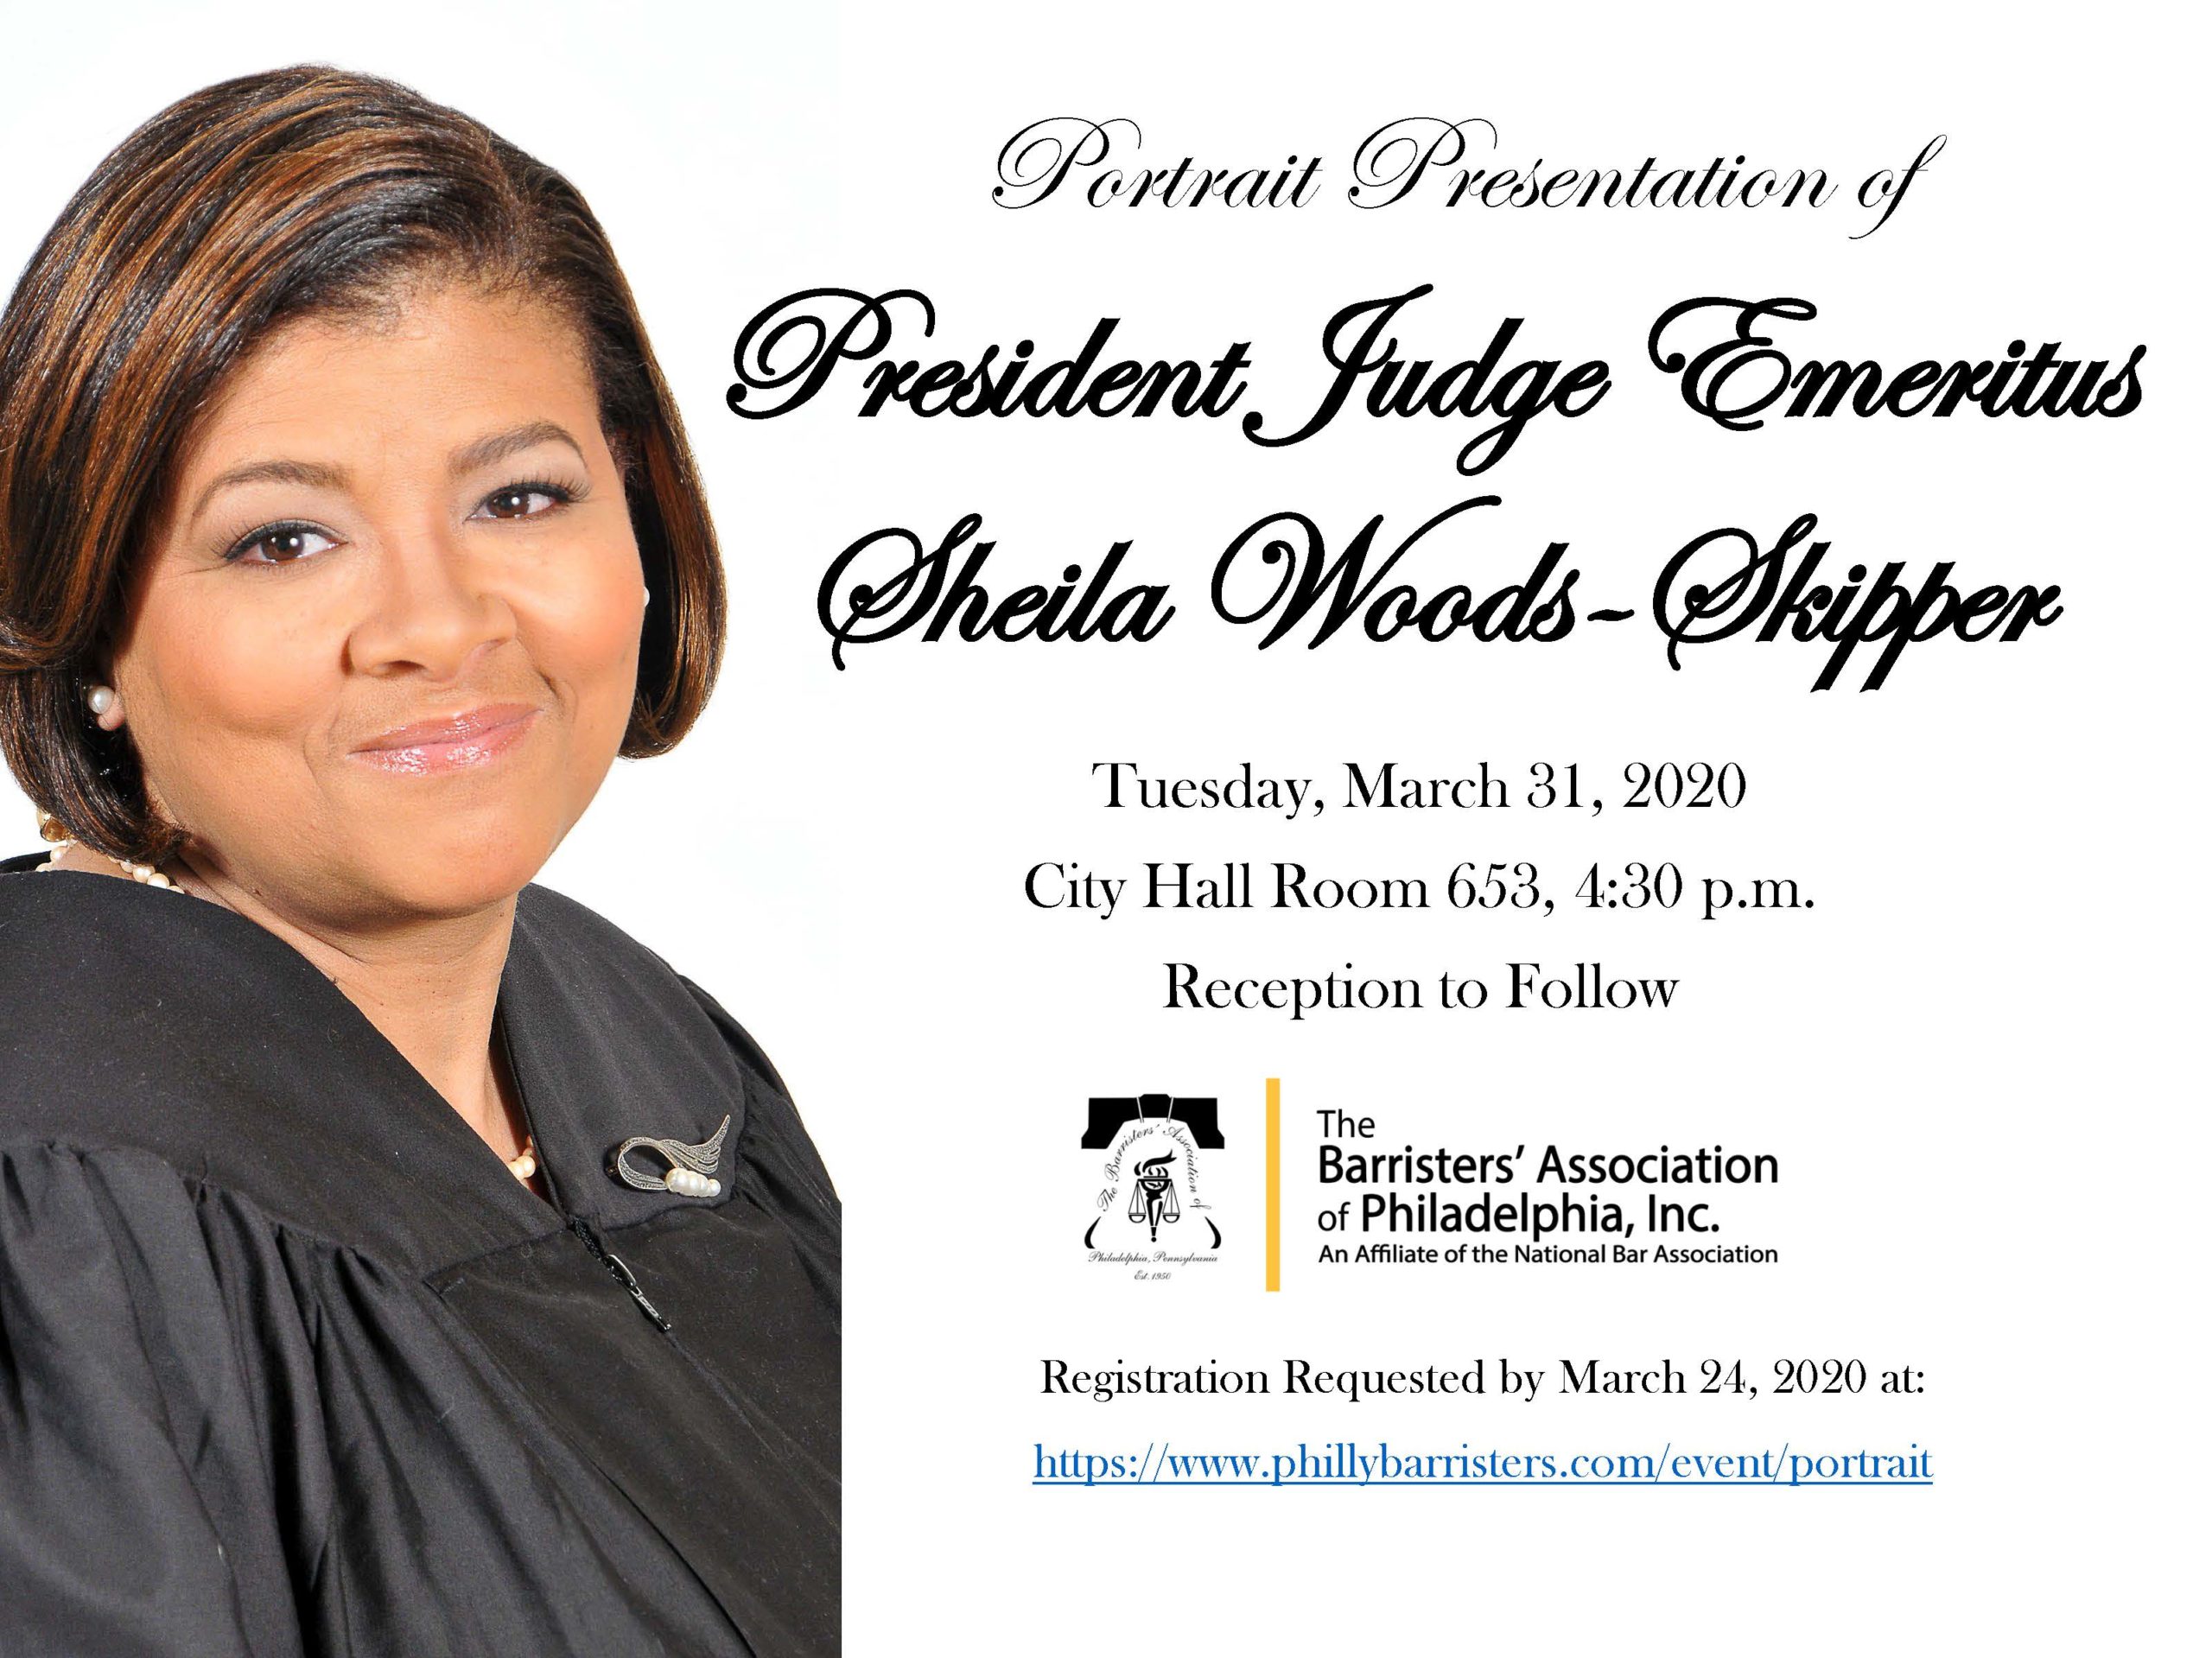 Postponed: Portrait Presentation of President Judge Emeritus Sheila Woods-Skipper